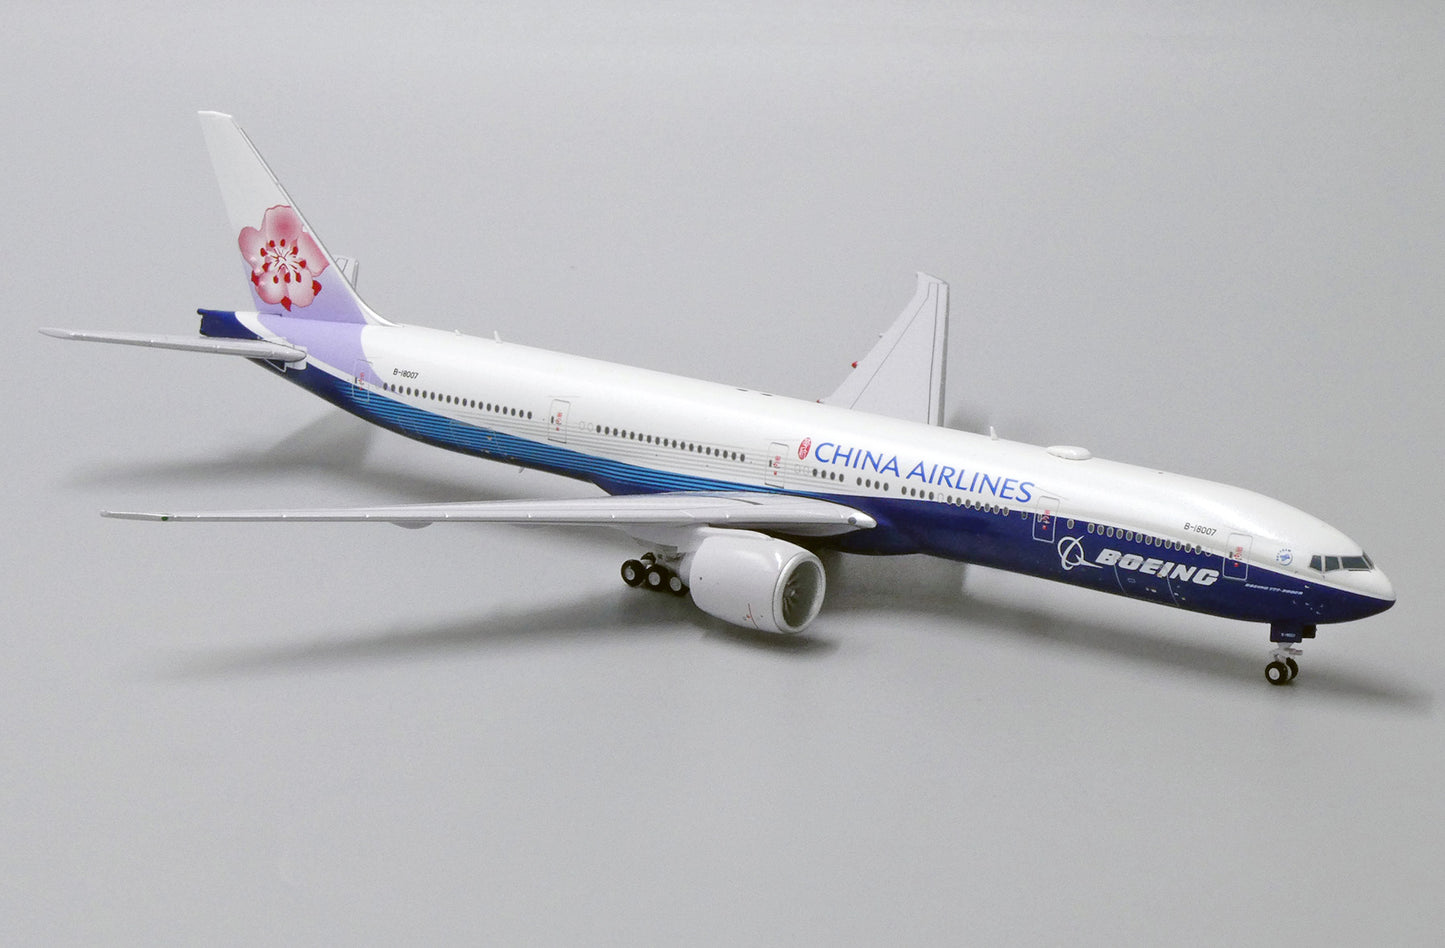 1/400 China Airlines B 777-300ER "Dreamliner" JC Wings EW477W006